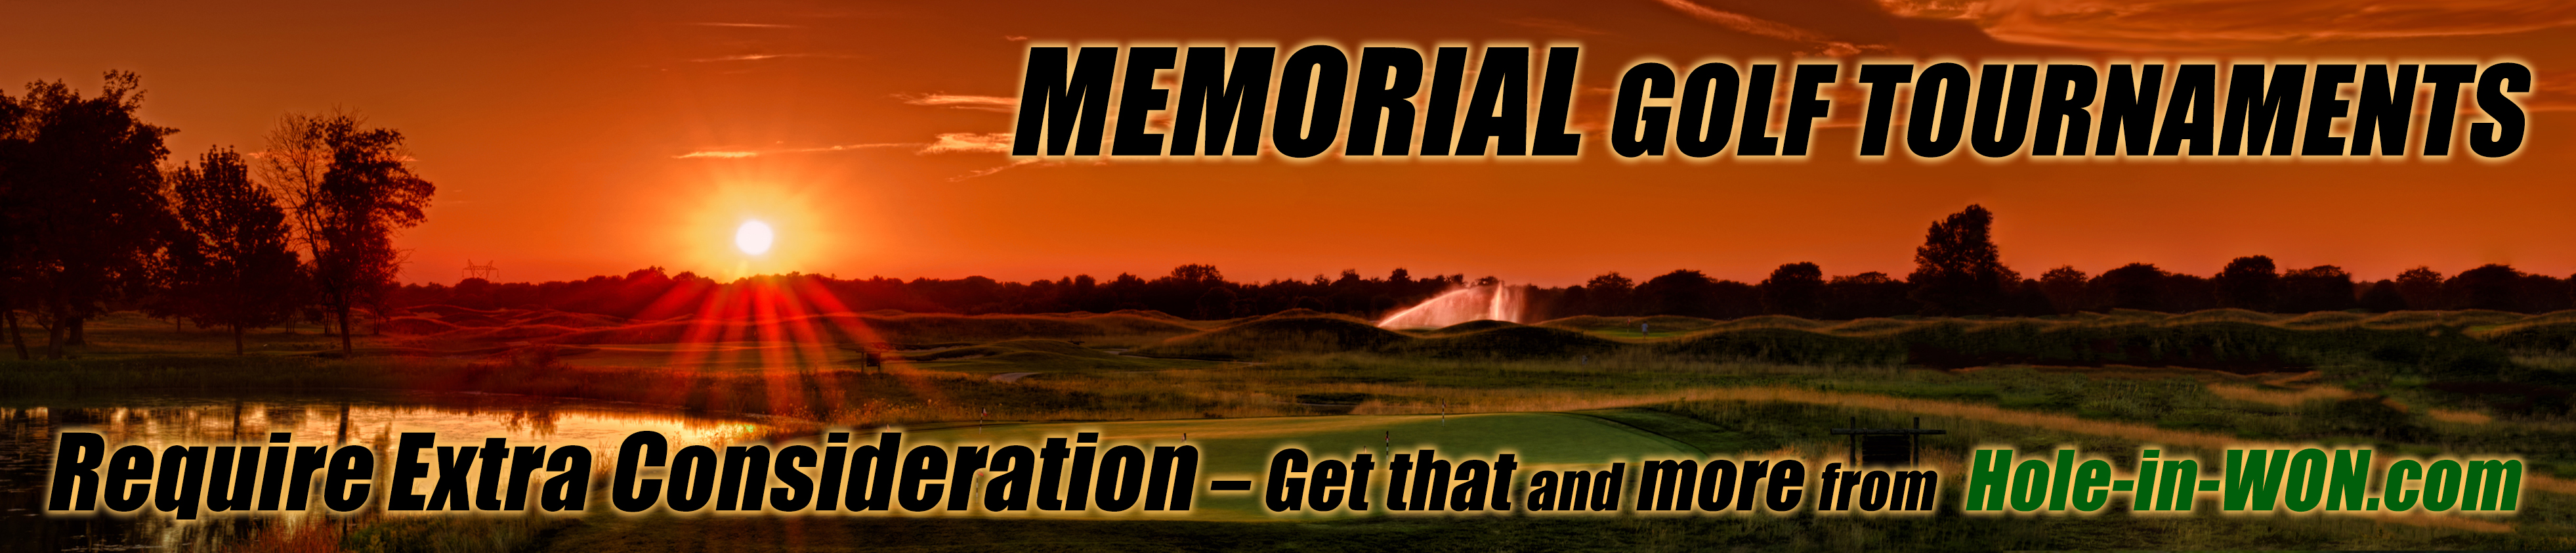 Memorial Golf Tournament Golf Insurance Hole-in-WON.com